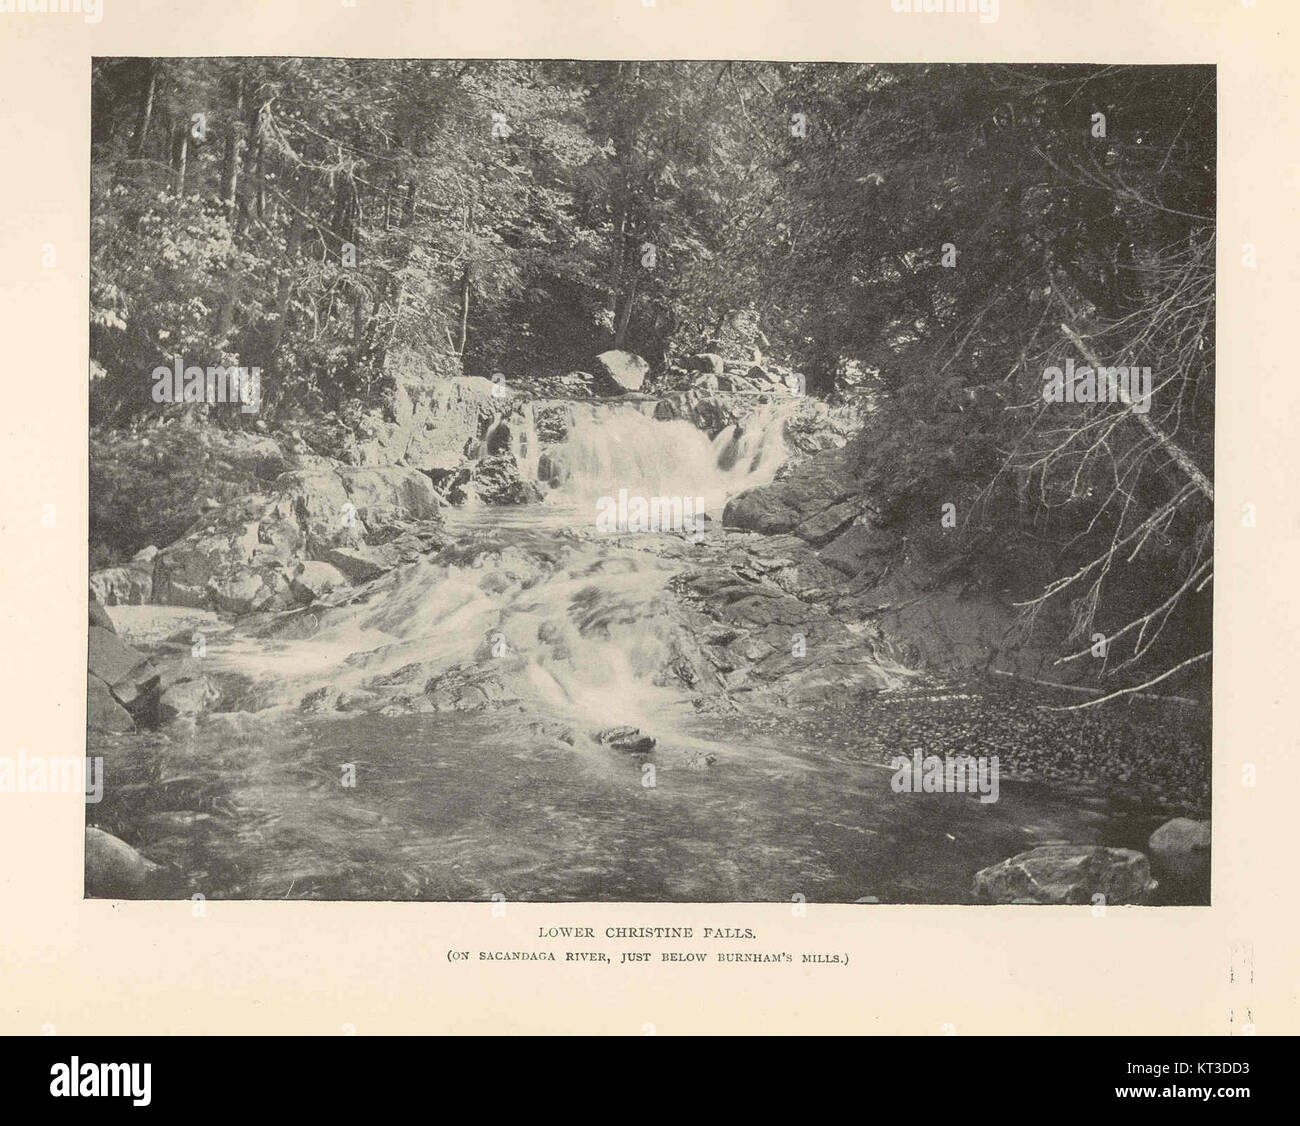 41649 Lower Christine Falls (On Sacandaga River, just below Burnham's Mills) Stock Photo